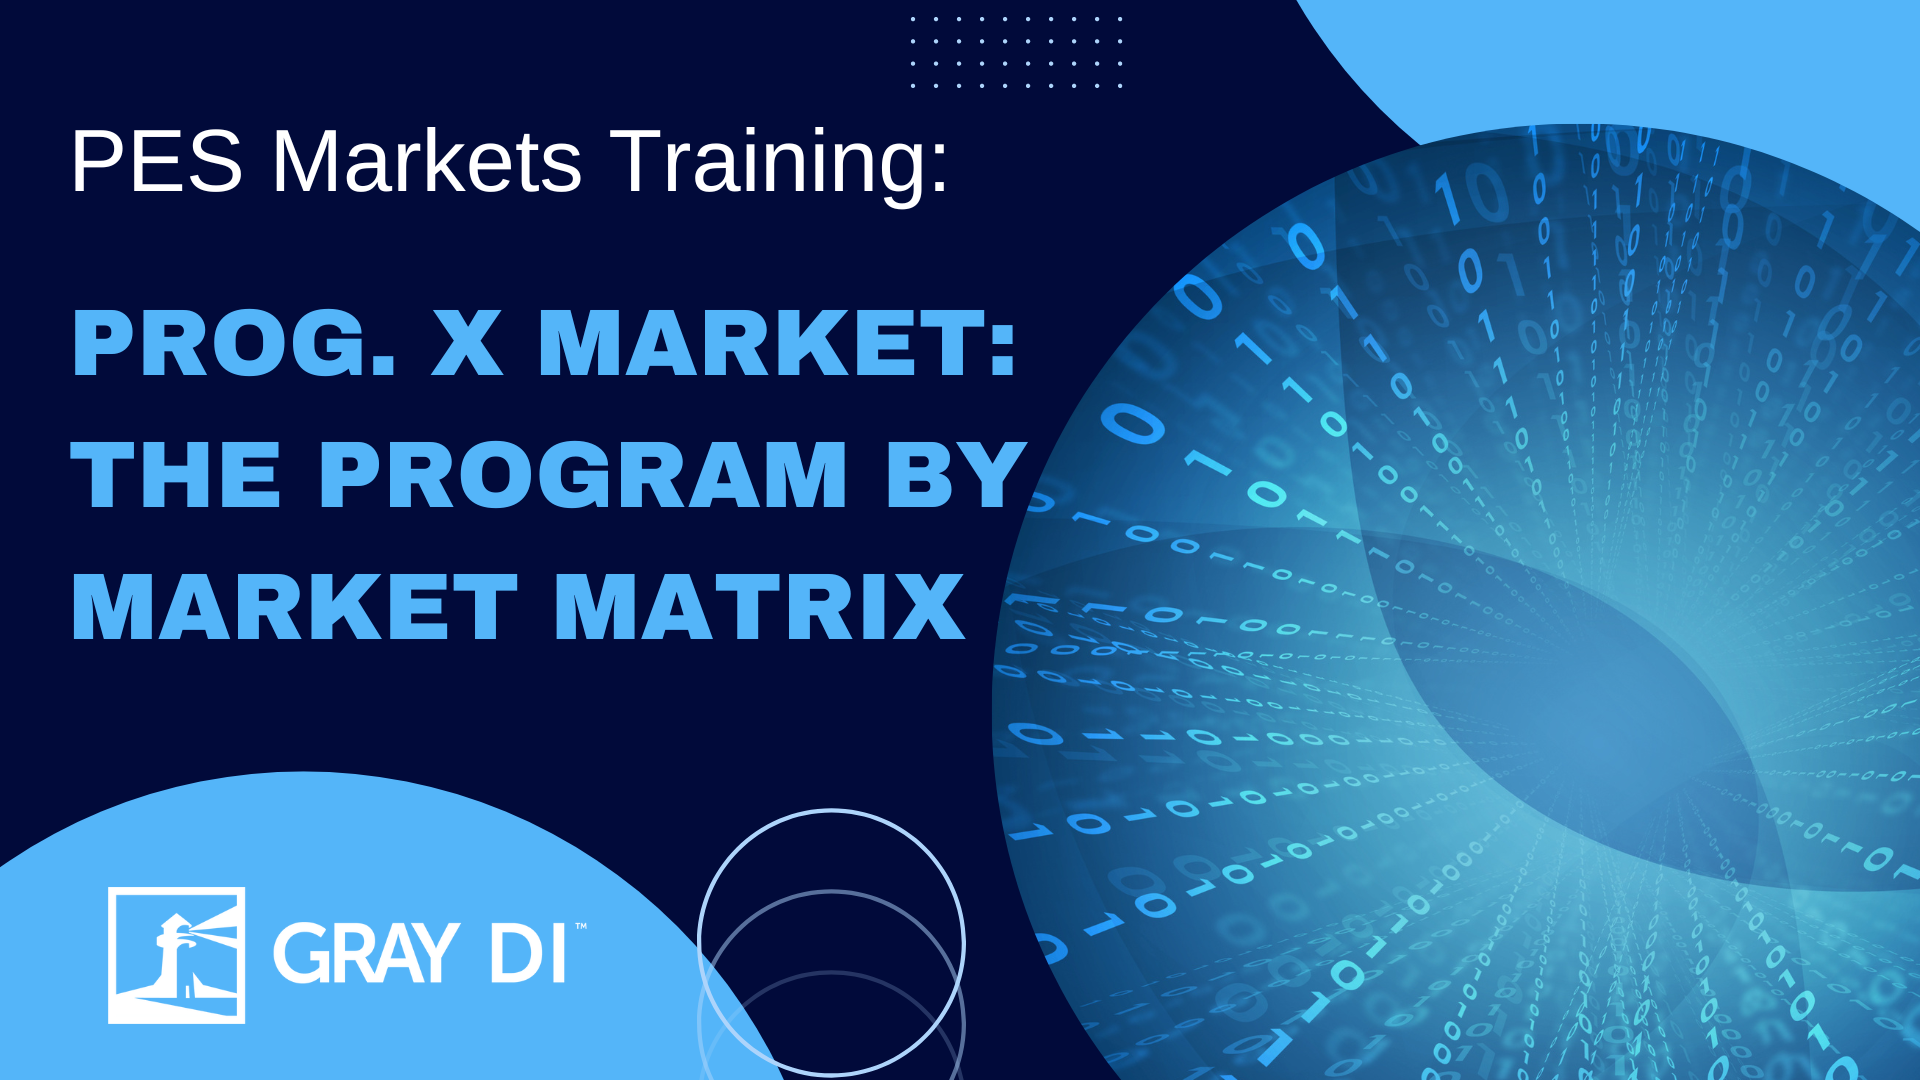 The Program by Market Matrix